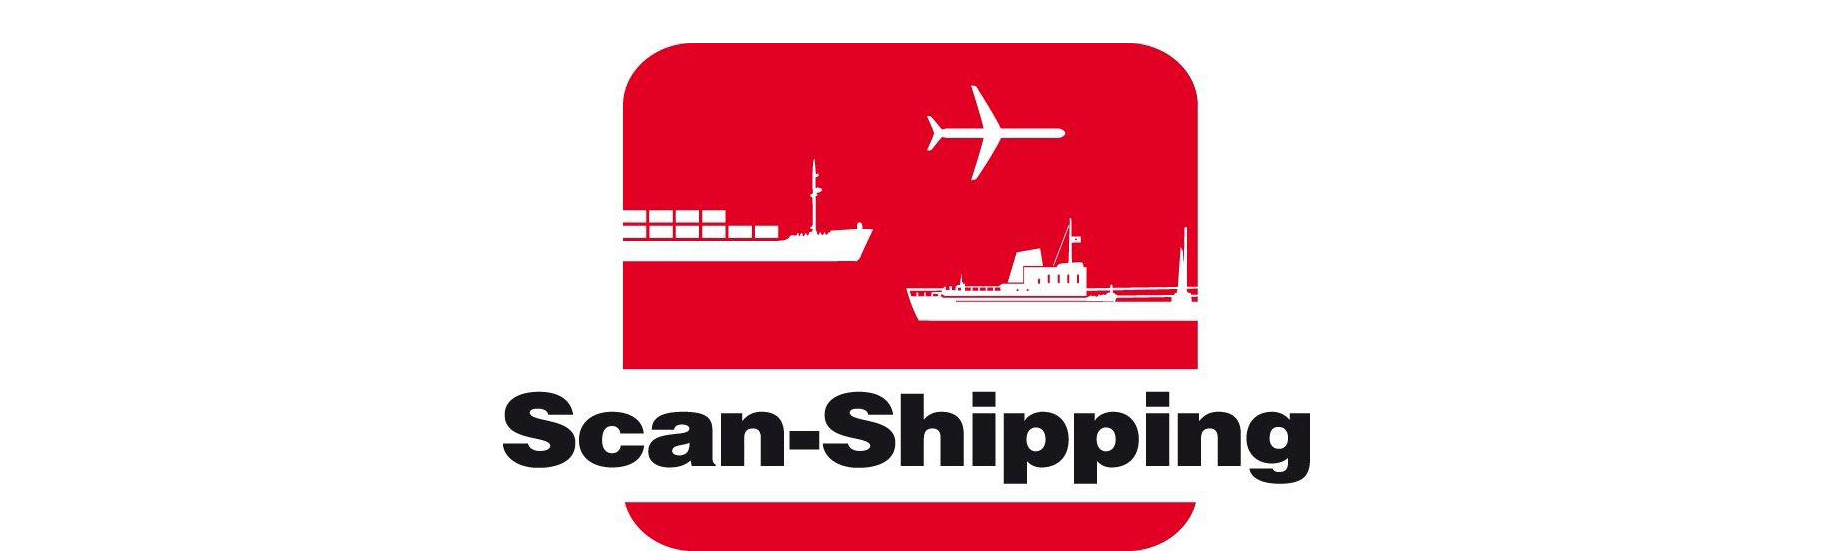 Scan_Shipping_RGBbig